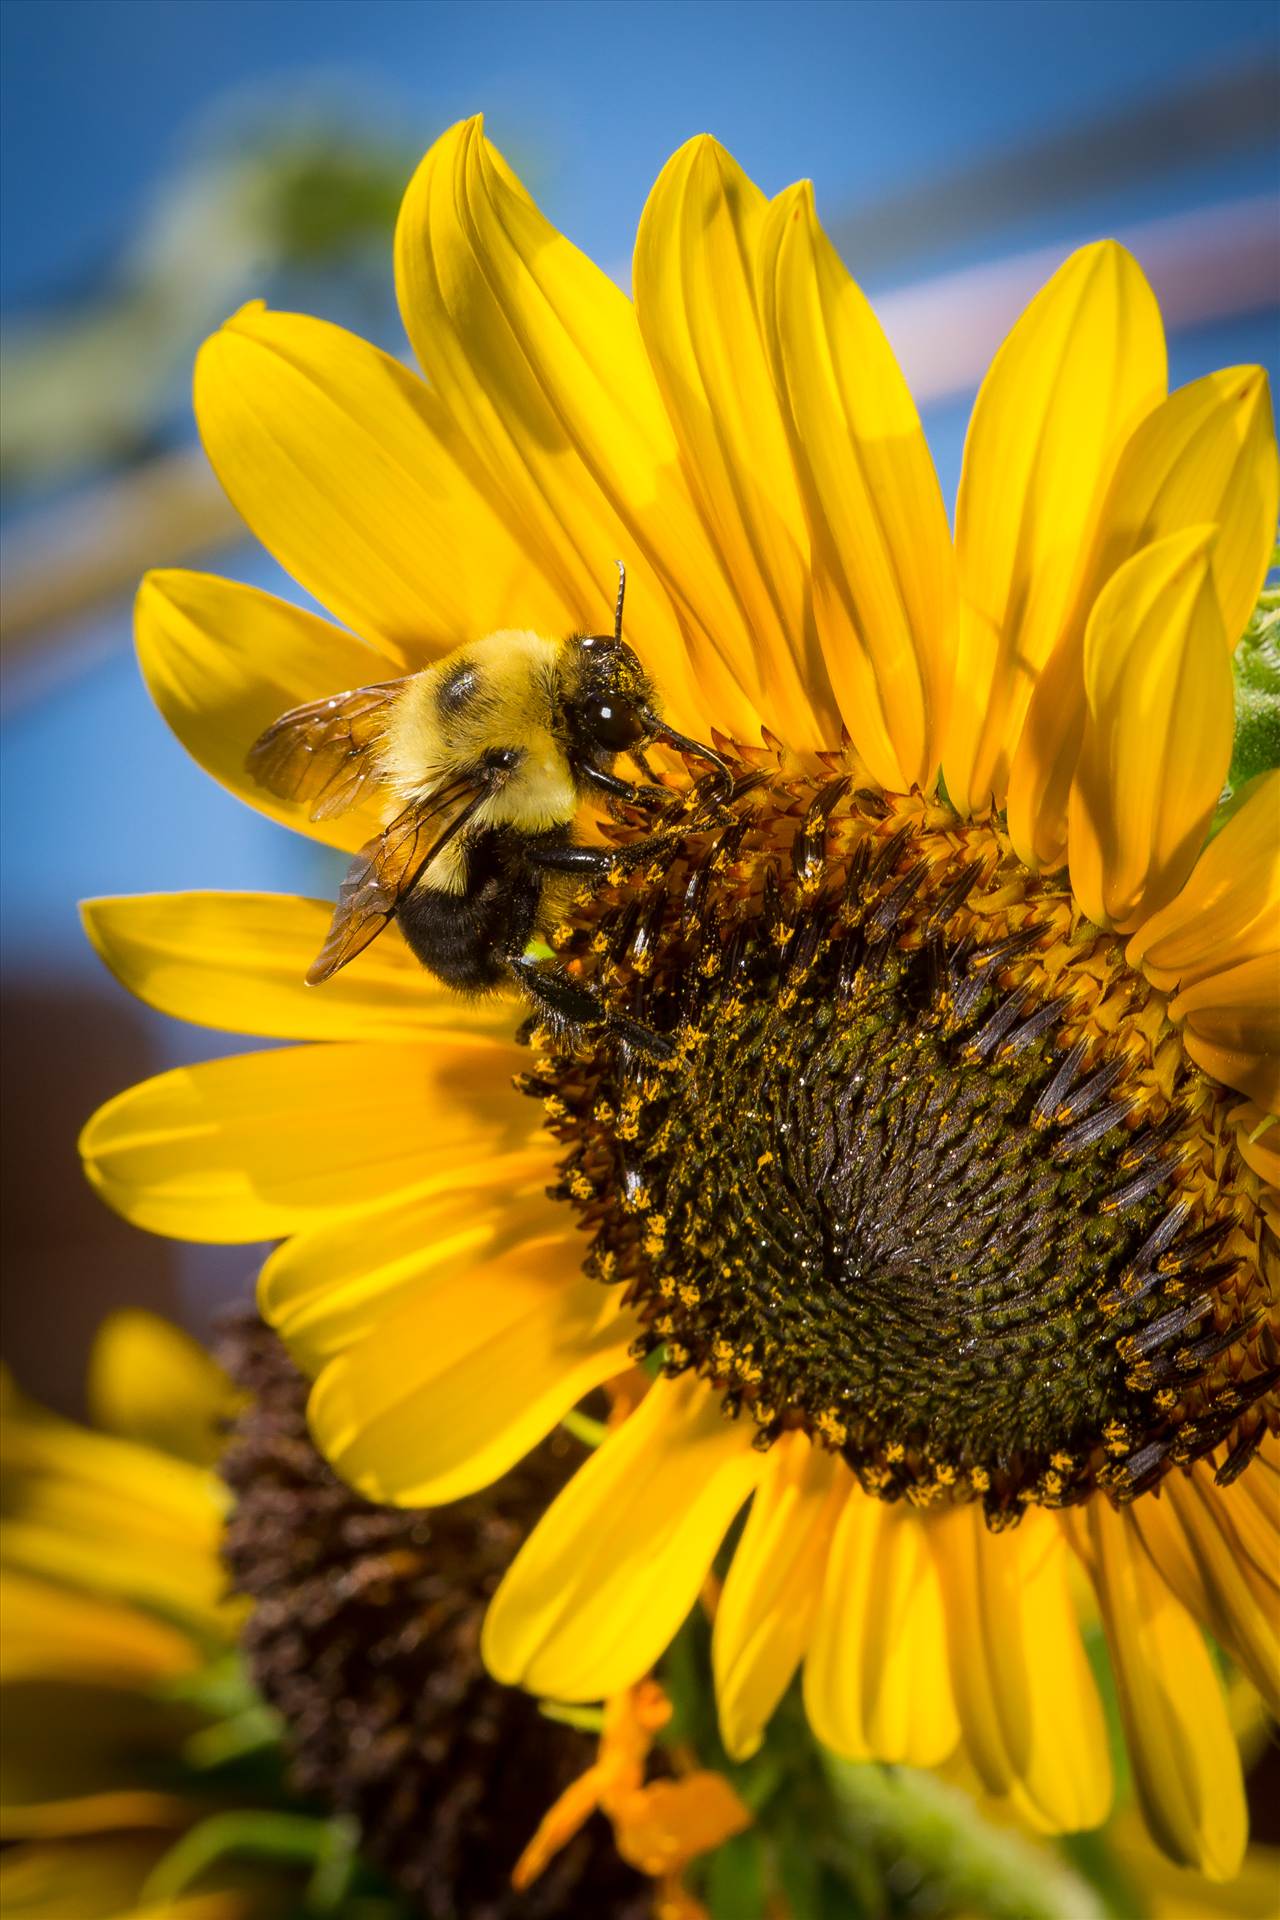 Honeybee Collecting Pollen - A honeybee collecting pollen from a sunflower. by Scott Smith Photos